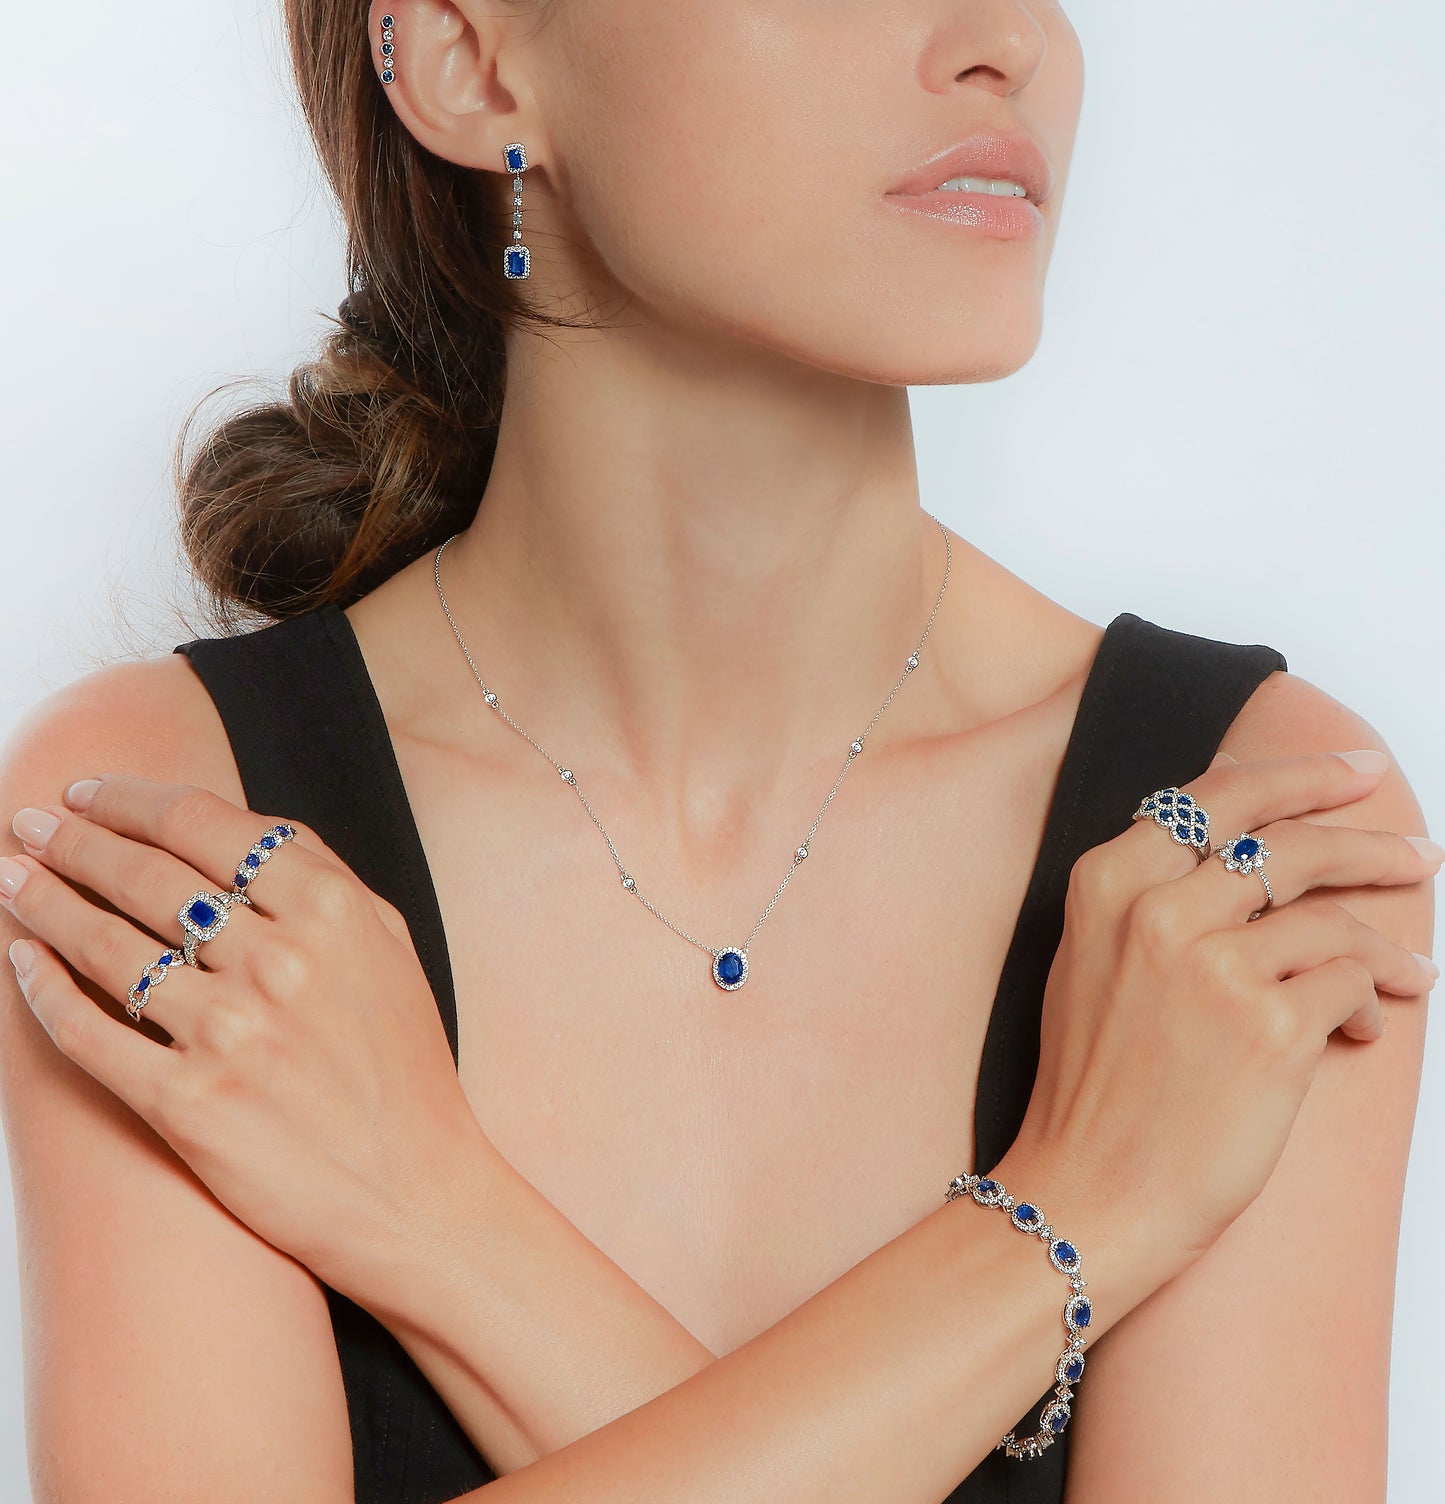 14kw Sapphire and Diamond Earrings